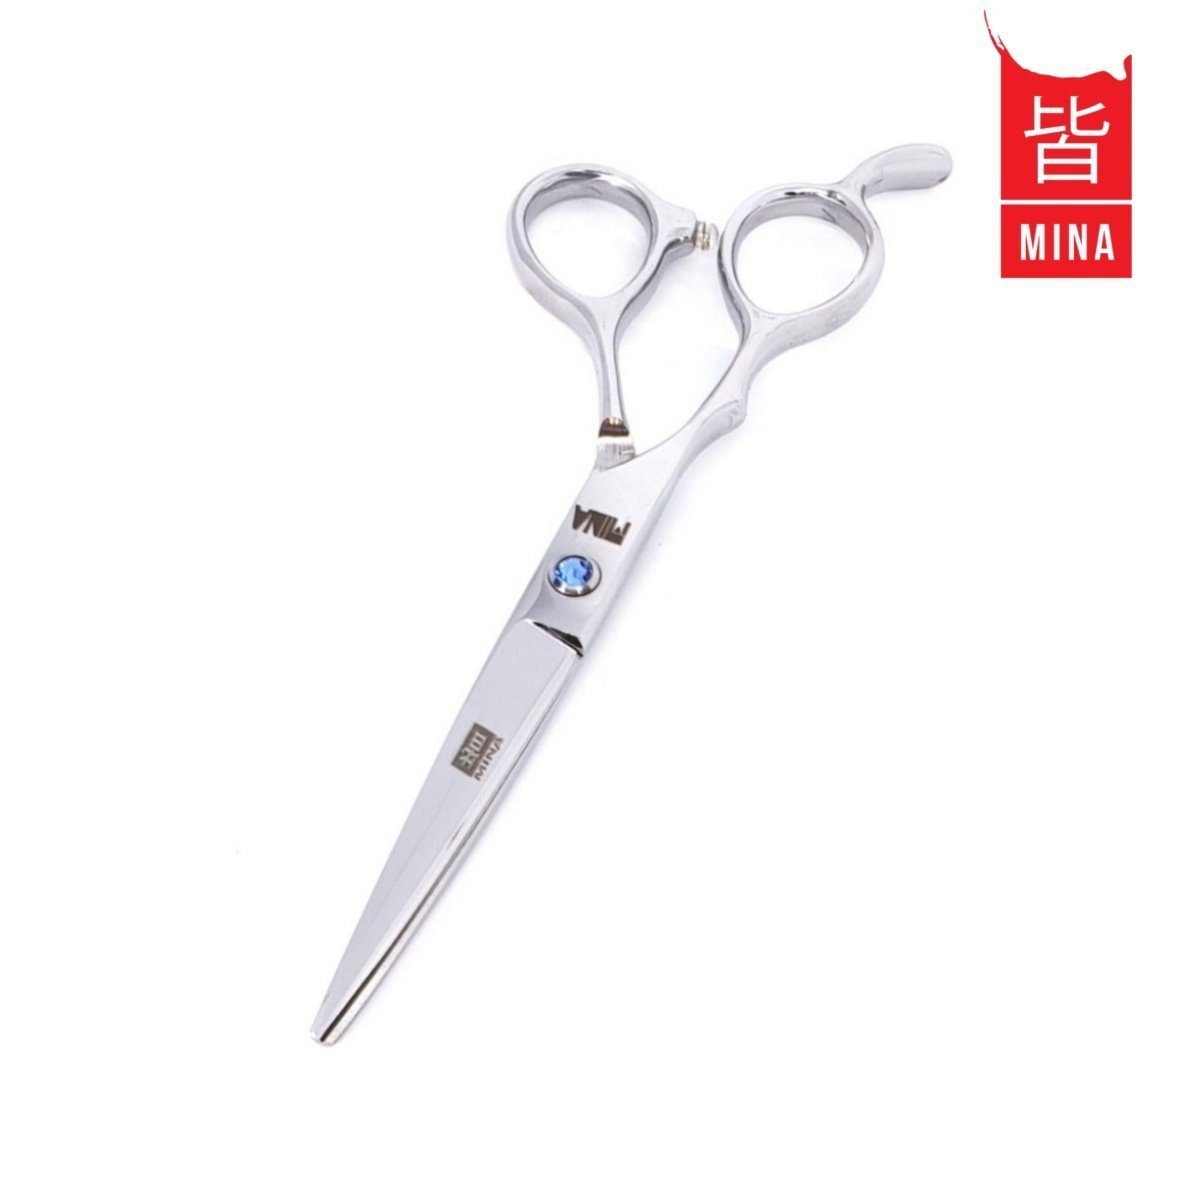 Mina Umi Hair Scissors